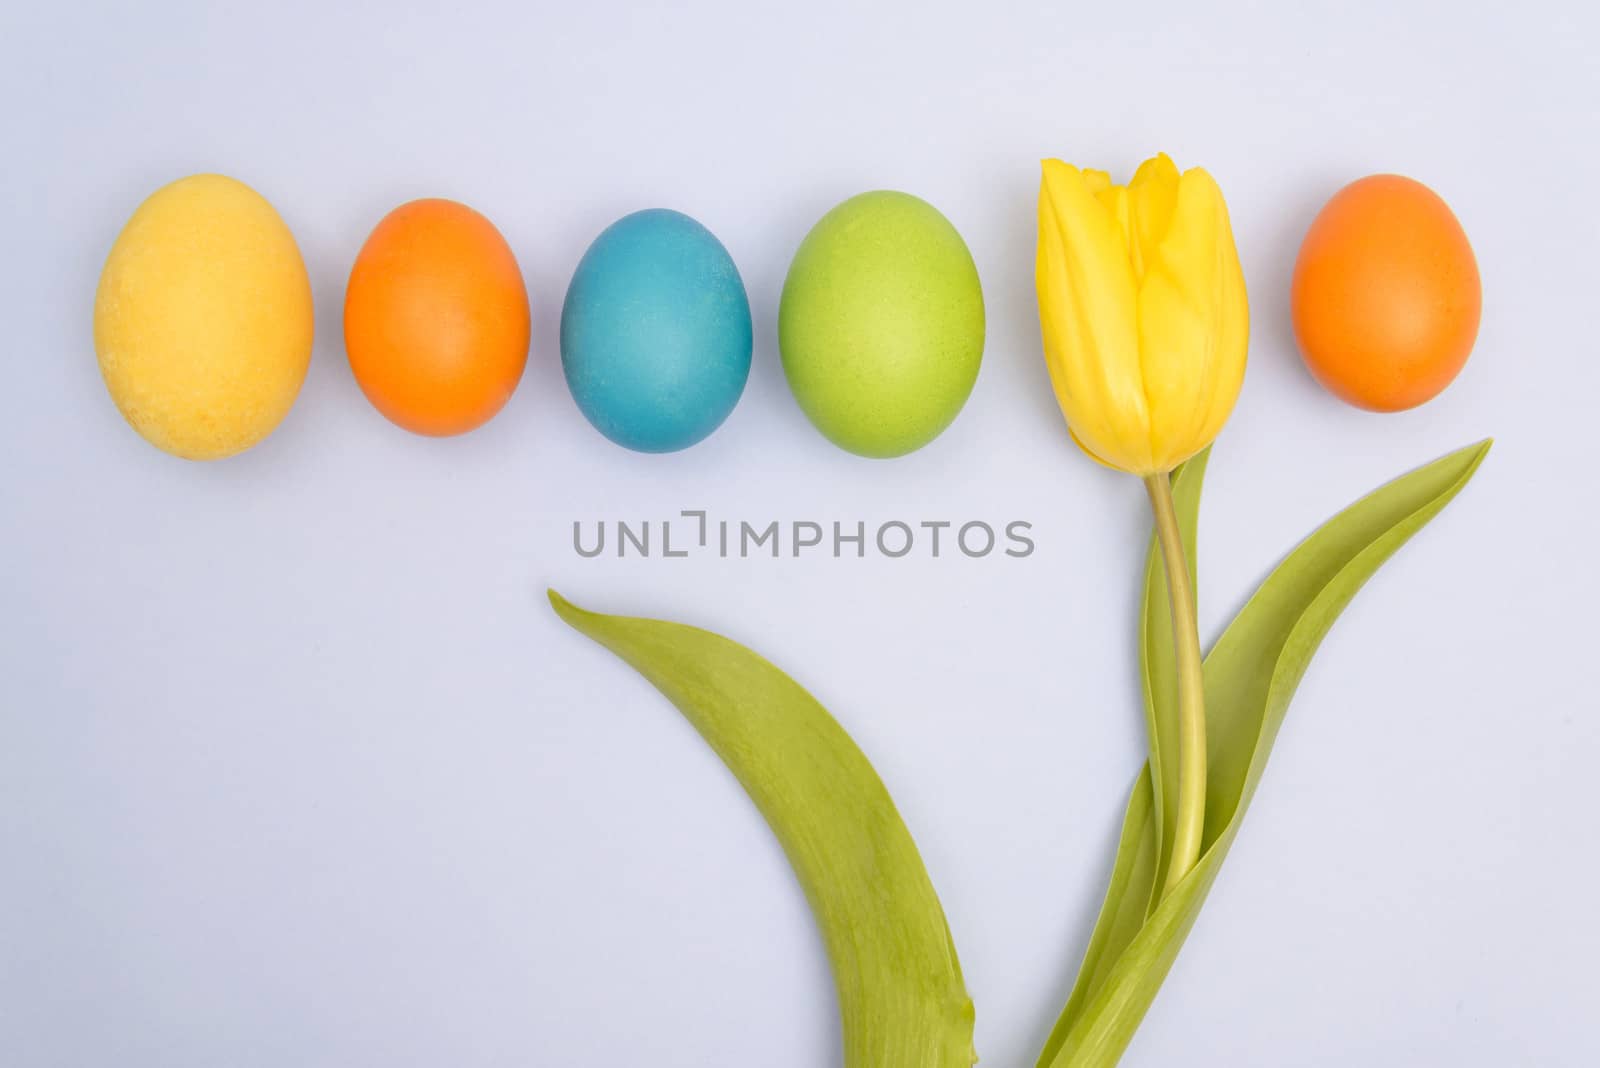 Funny, joyful, amusing photo of Easter multicoloured eggs against blue uniform background and yellow tulip.